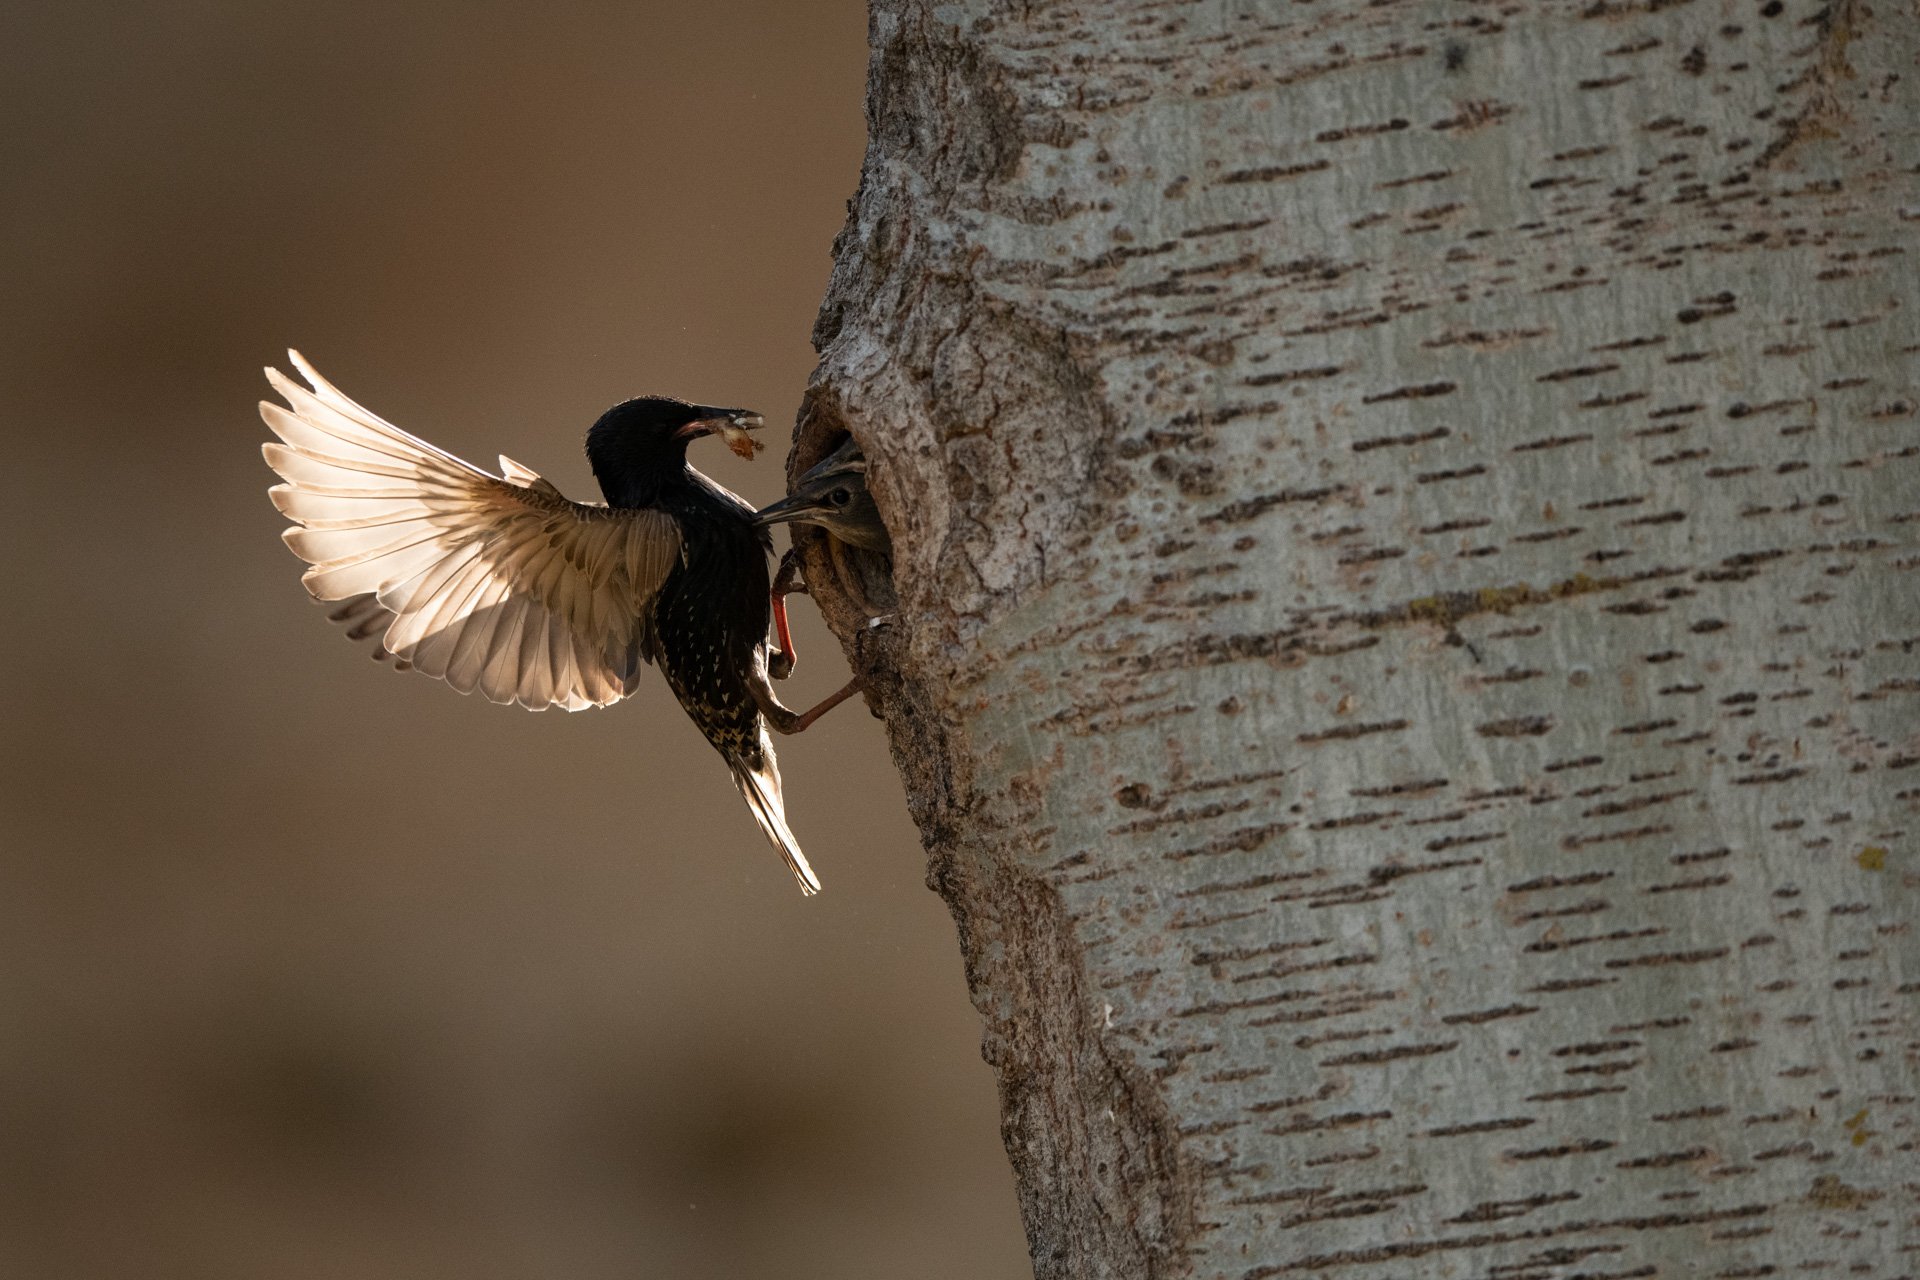 aweb2-starling nest-birds.jpg